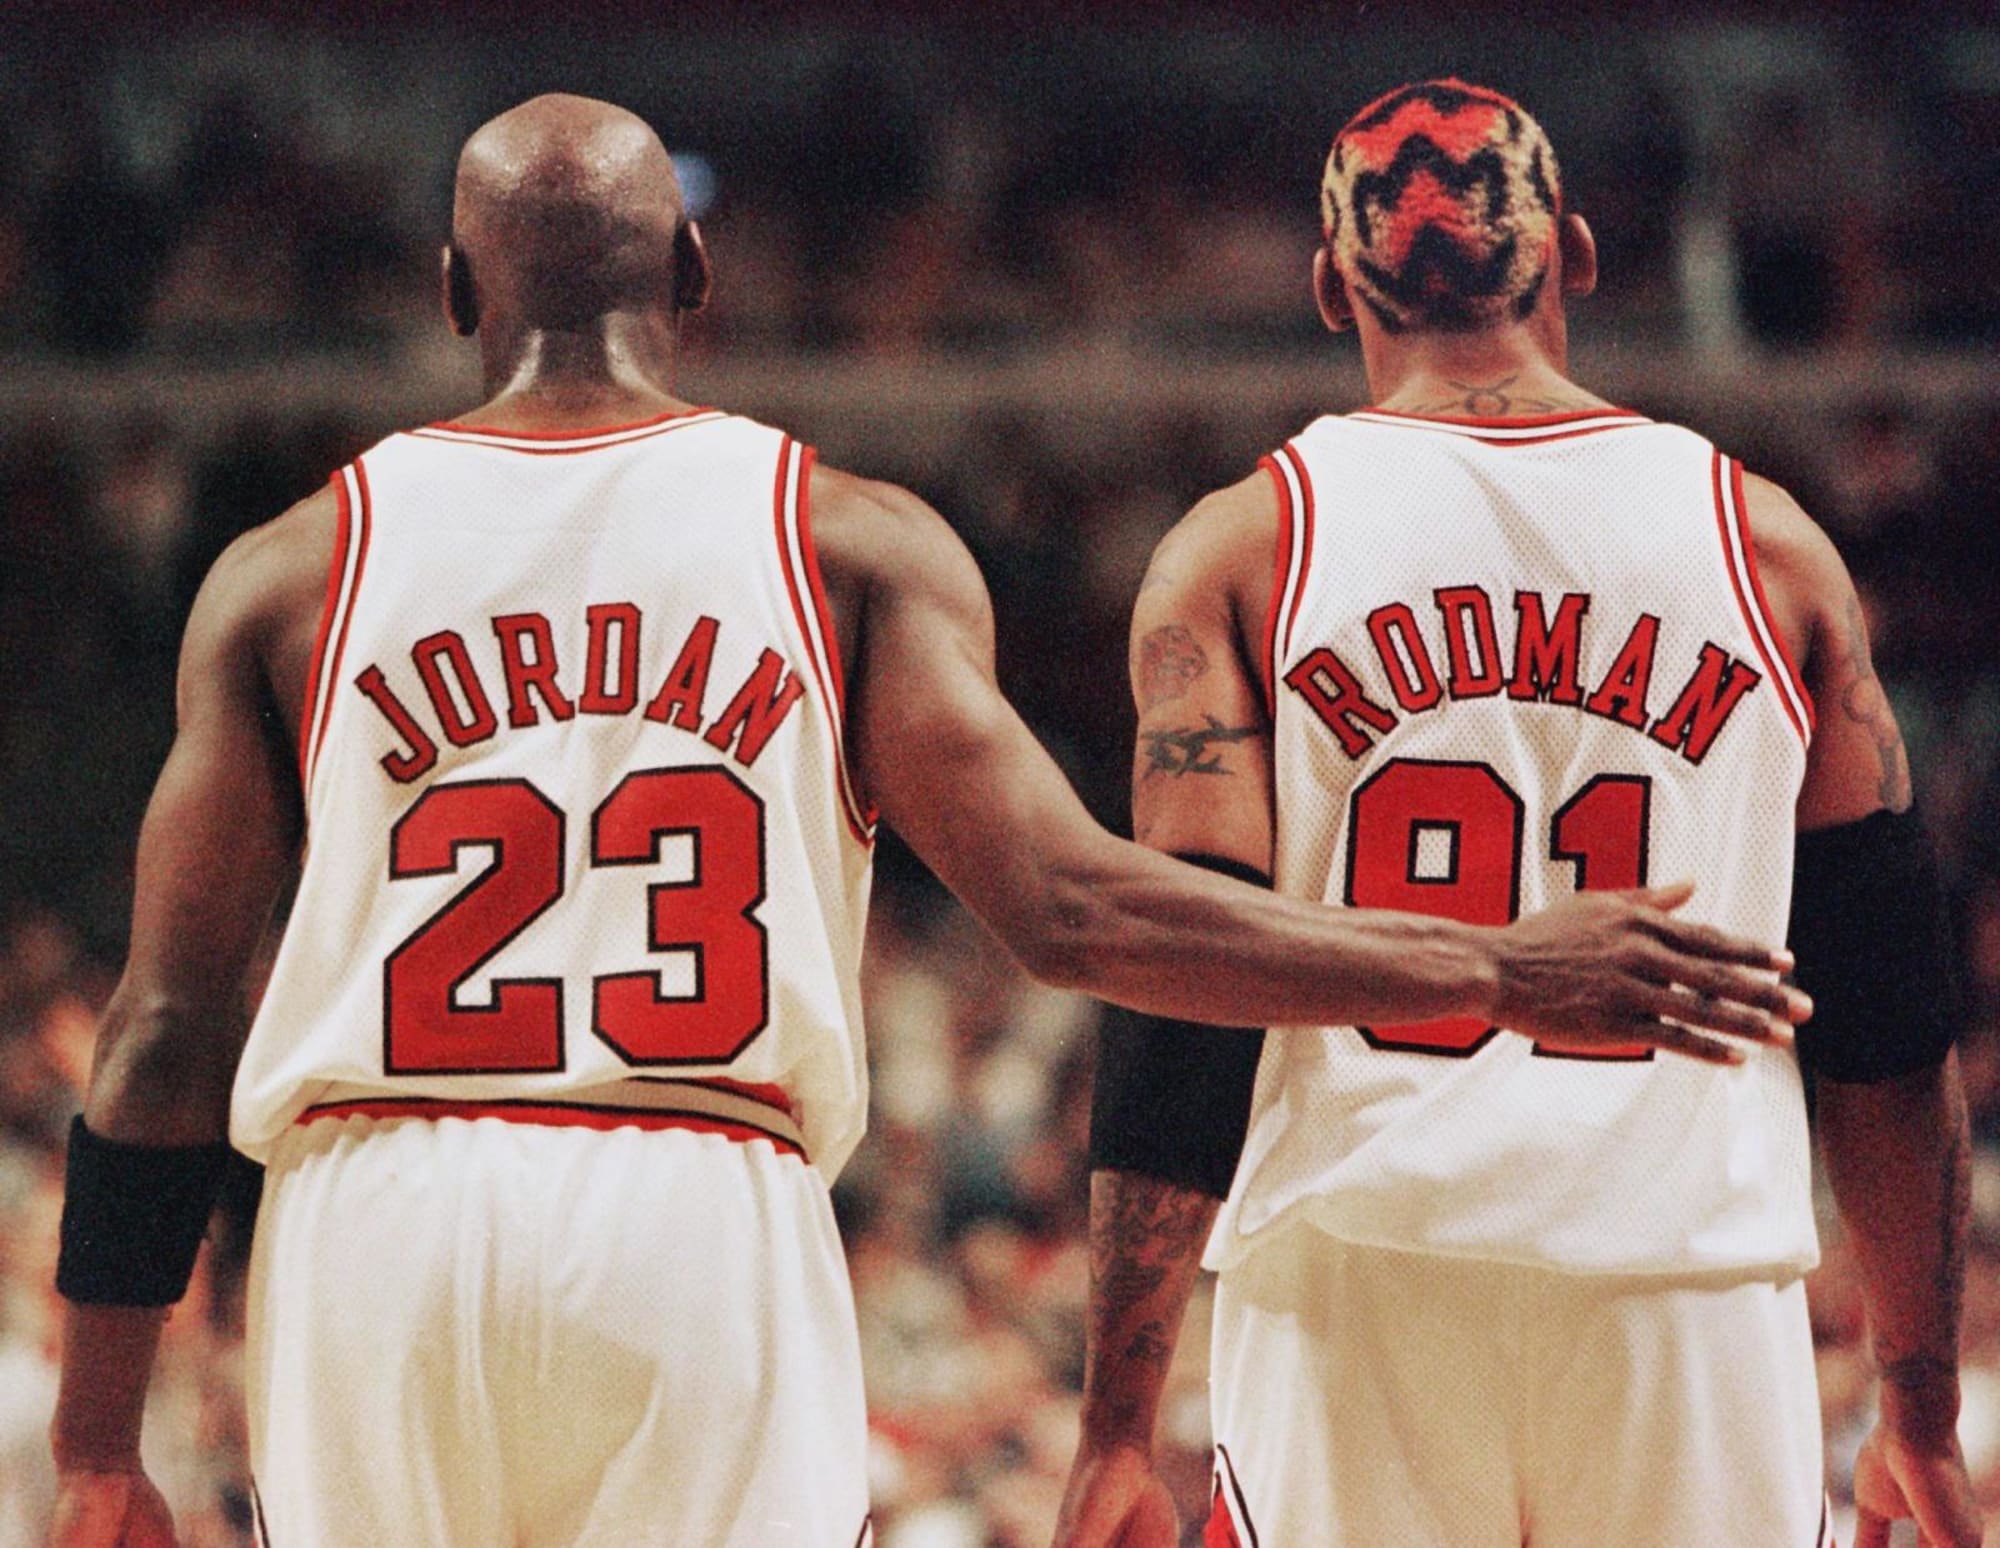 Chicago Bulls 5 best Michael Jordan teammates on ‘The Last Dance’ team